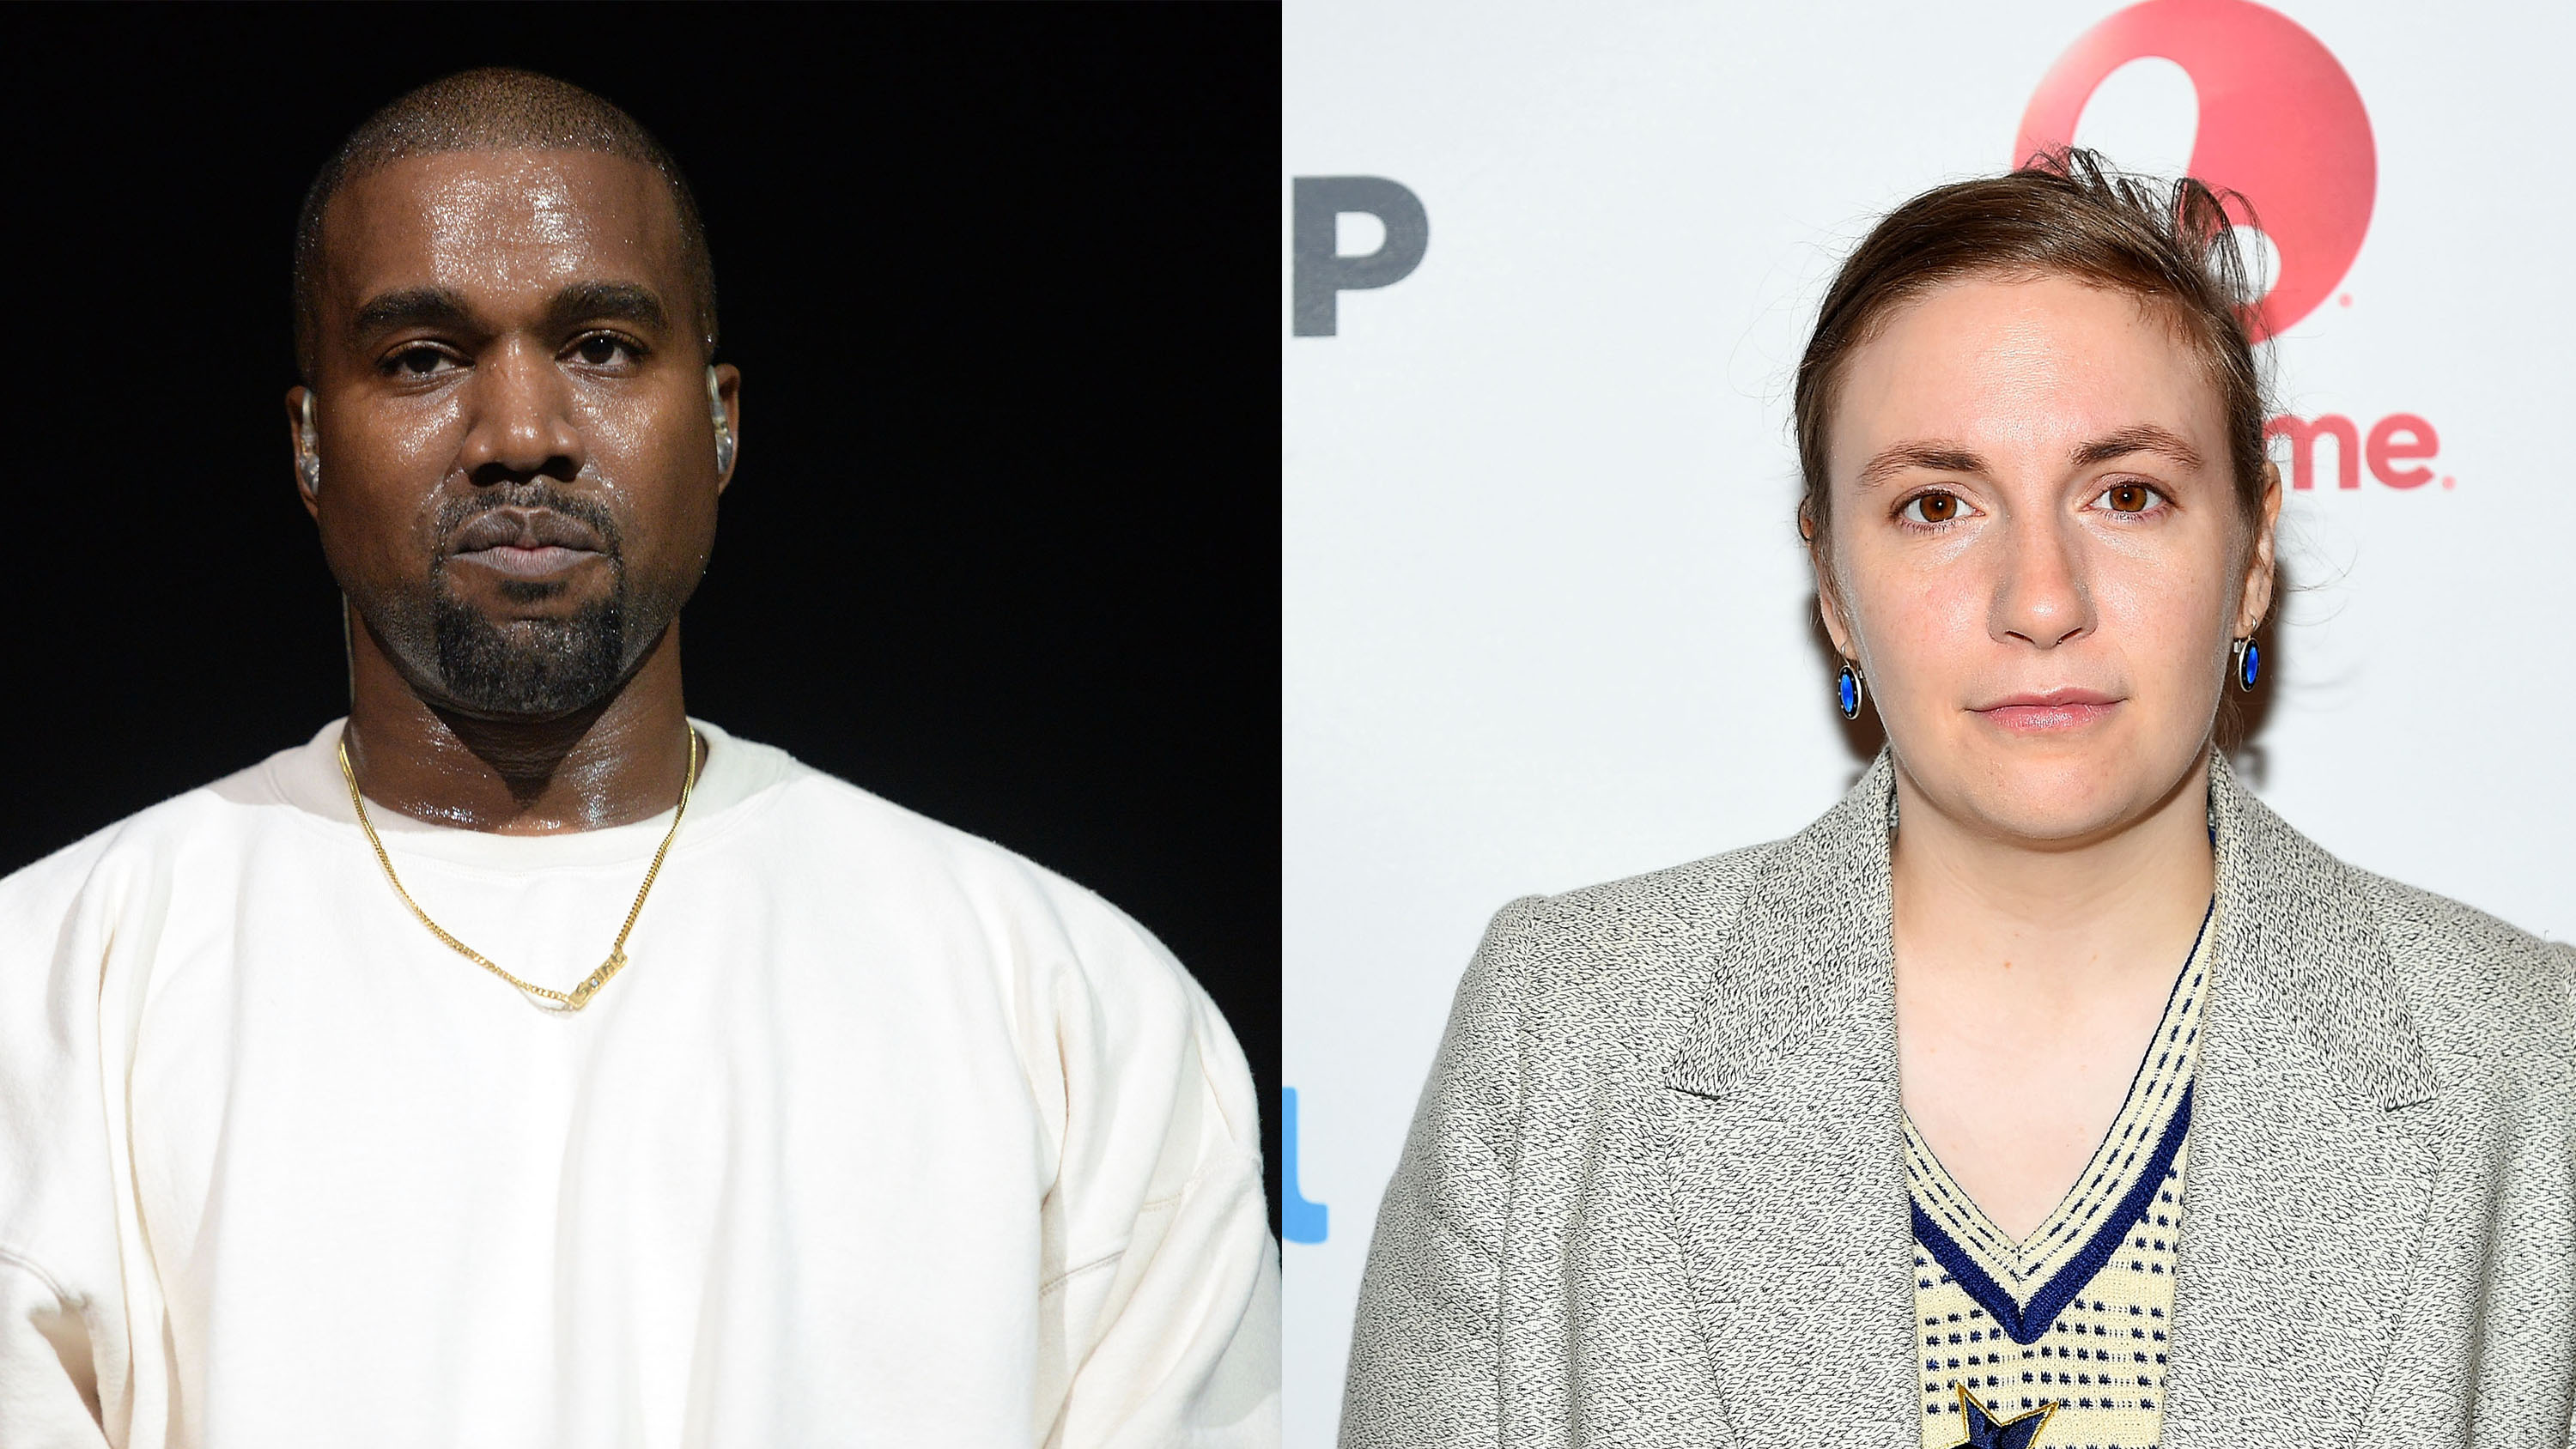 Lena Dunham commented on Kanye West's Famous music video (Scott Dudelson/FilmMagic; Ben Gabbe/Getty Images)